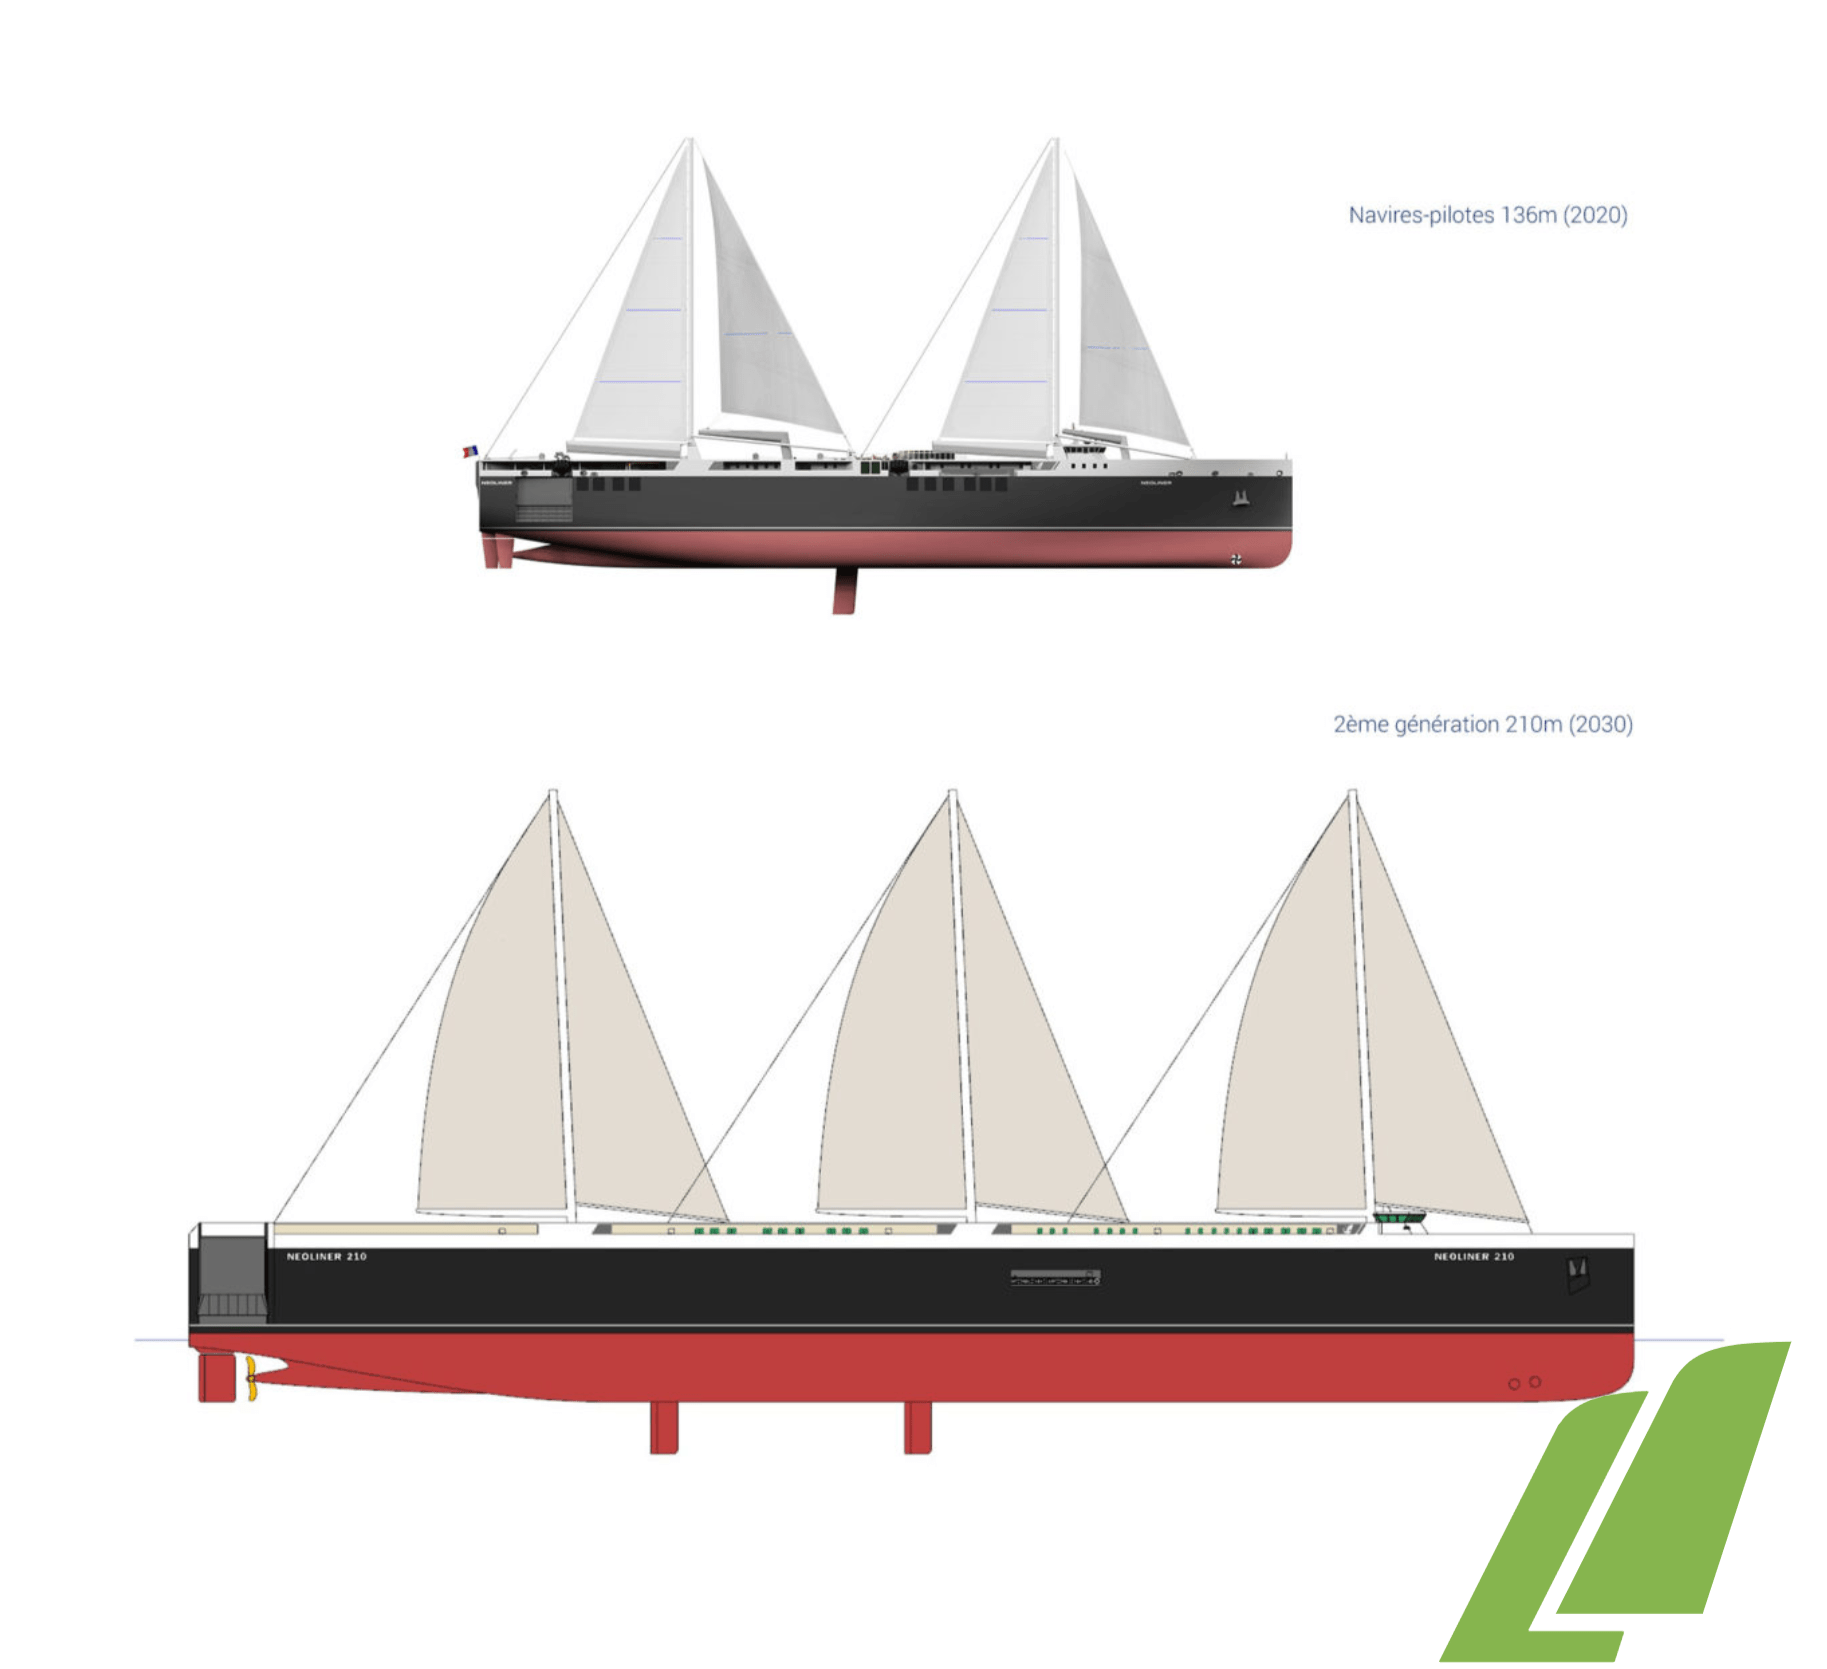 ship design development